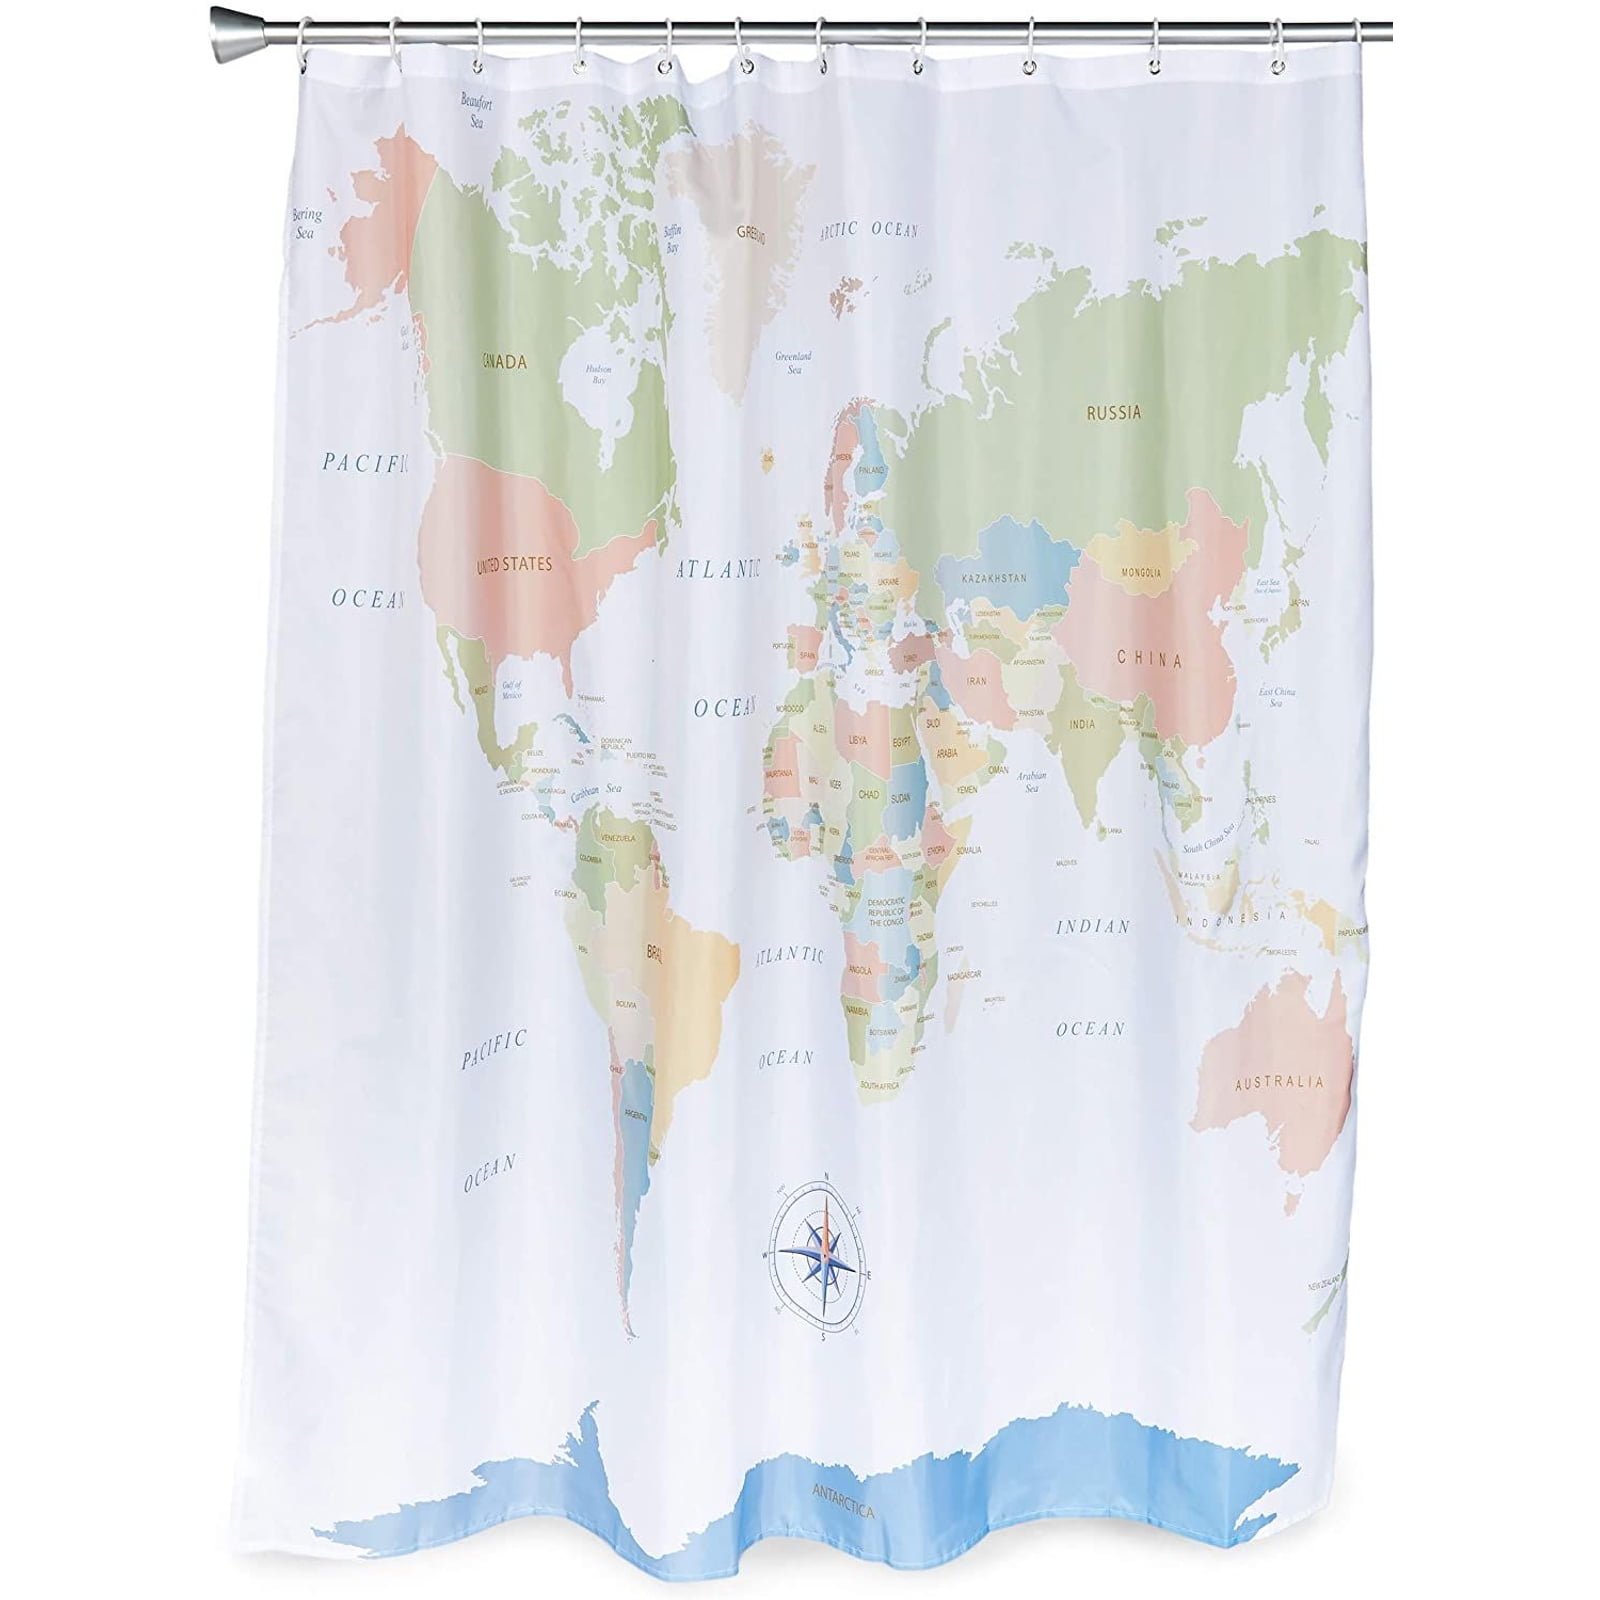 72X72" World Map Waterproof Fabric Bathroom Decor Shower Curtain Liner &12 Hooks 